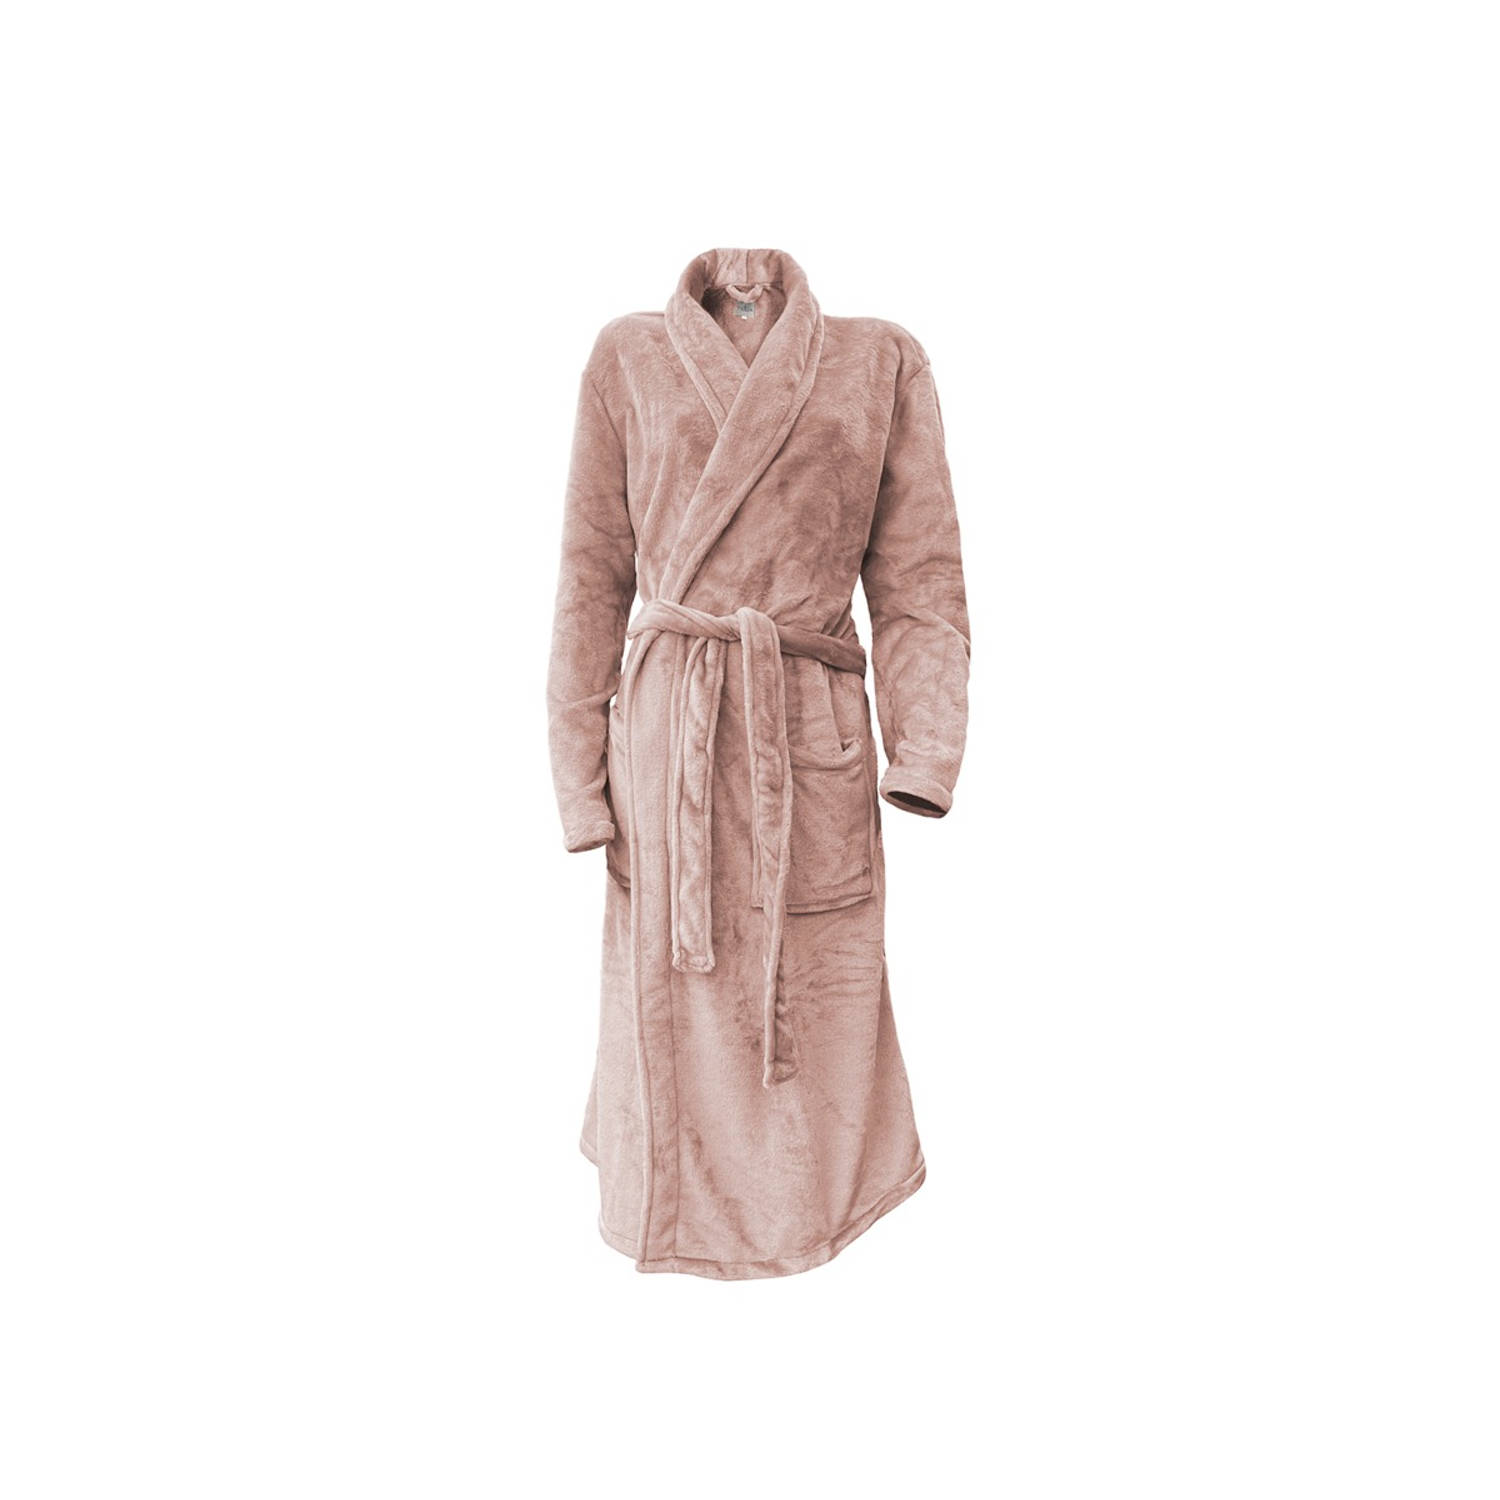 LINNICK Flanel Fleece Uni Badjas - Light Pink - XL - Badjas Dames - Badjas Heren